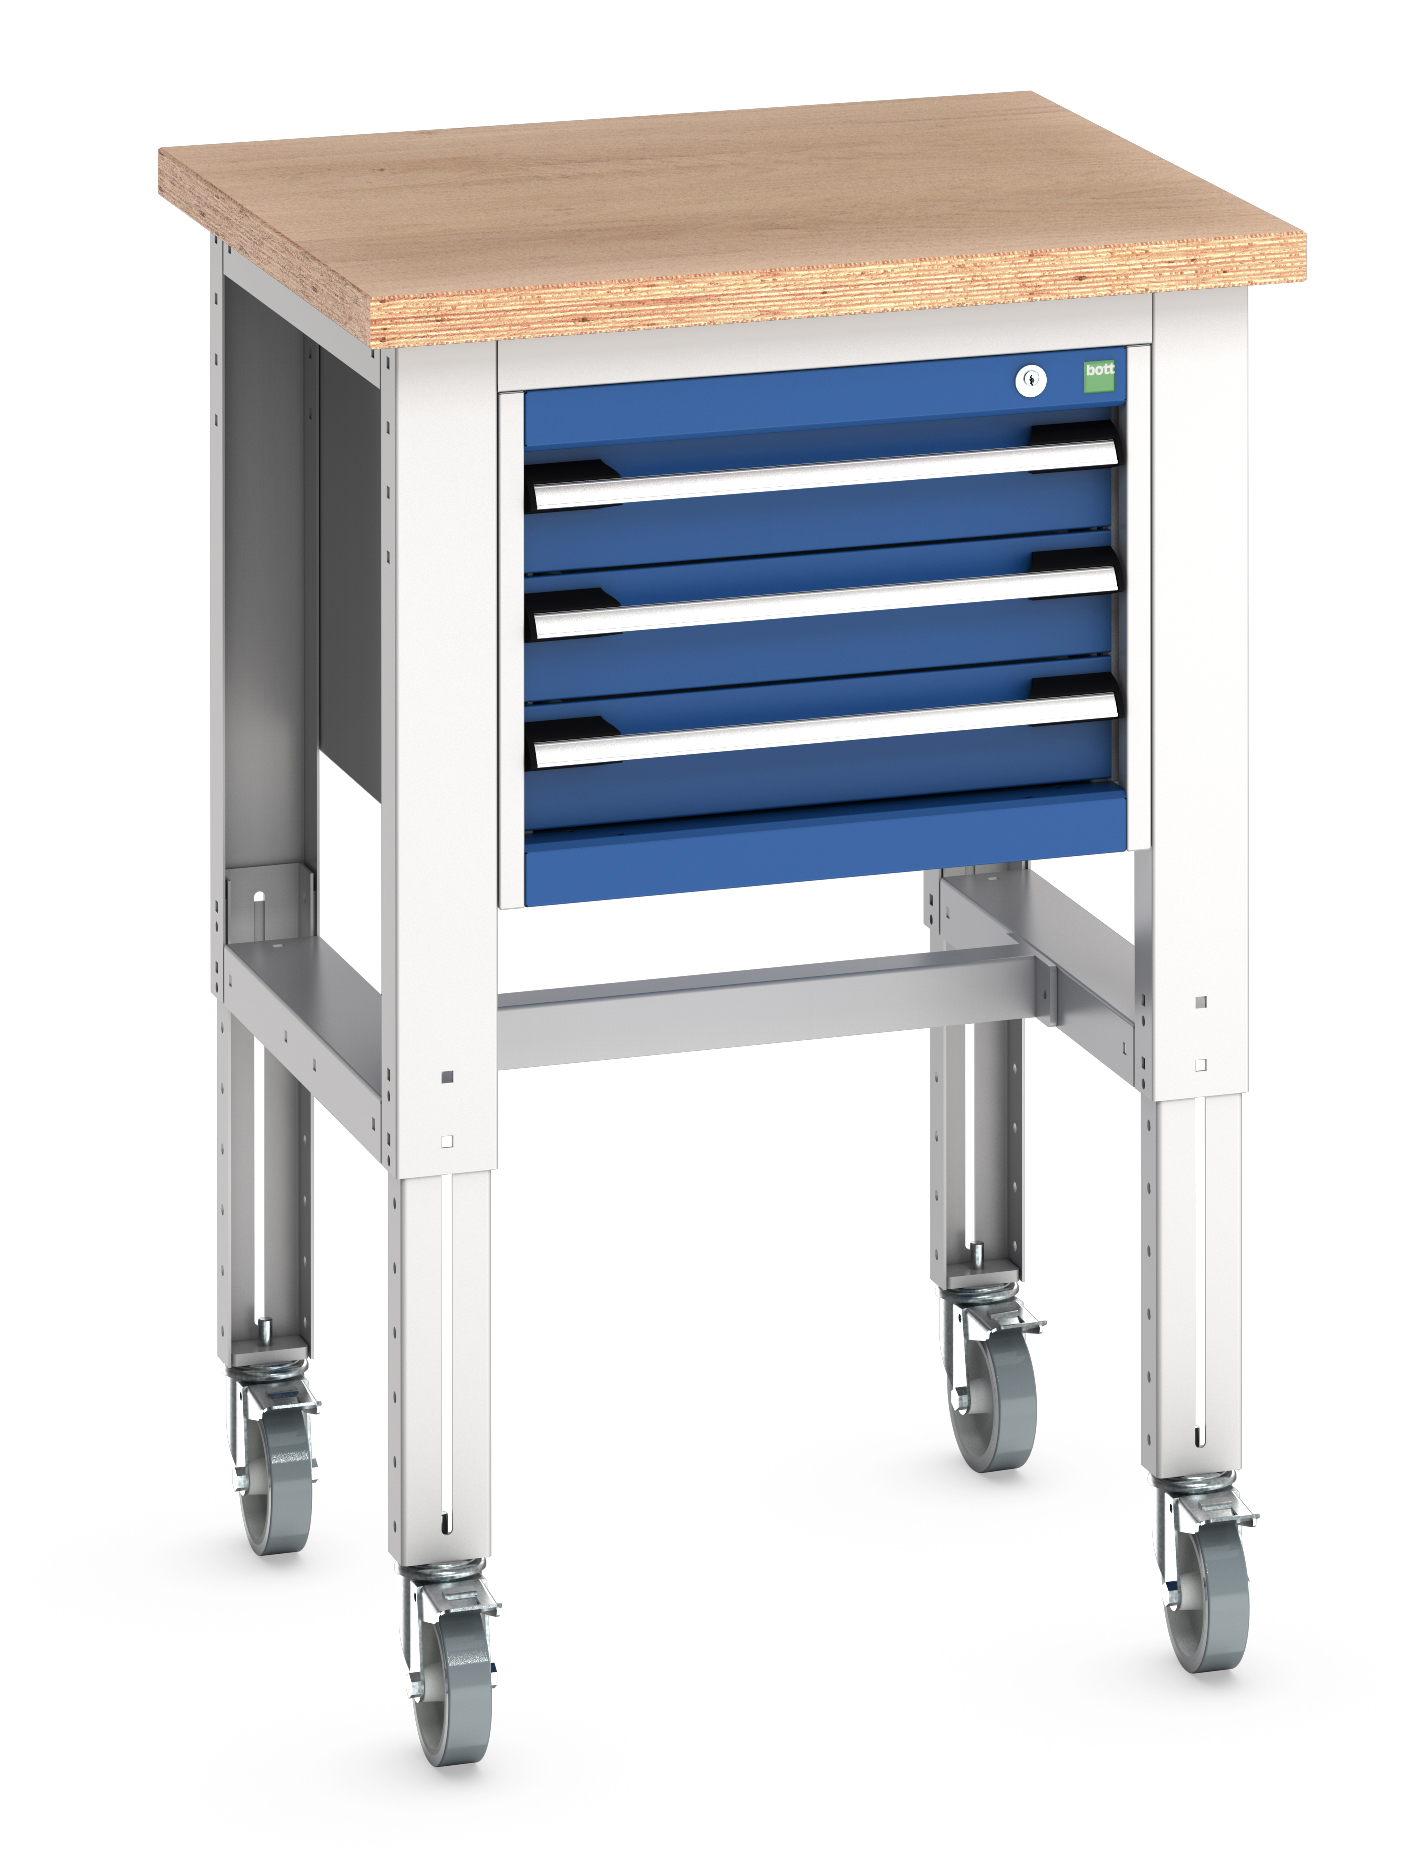 Bott Cubio Adjustable Height Mobile Workstand With 3 Drawer Cabinet - 41003527.11V